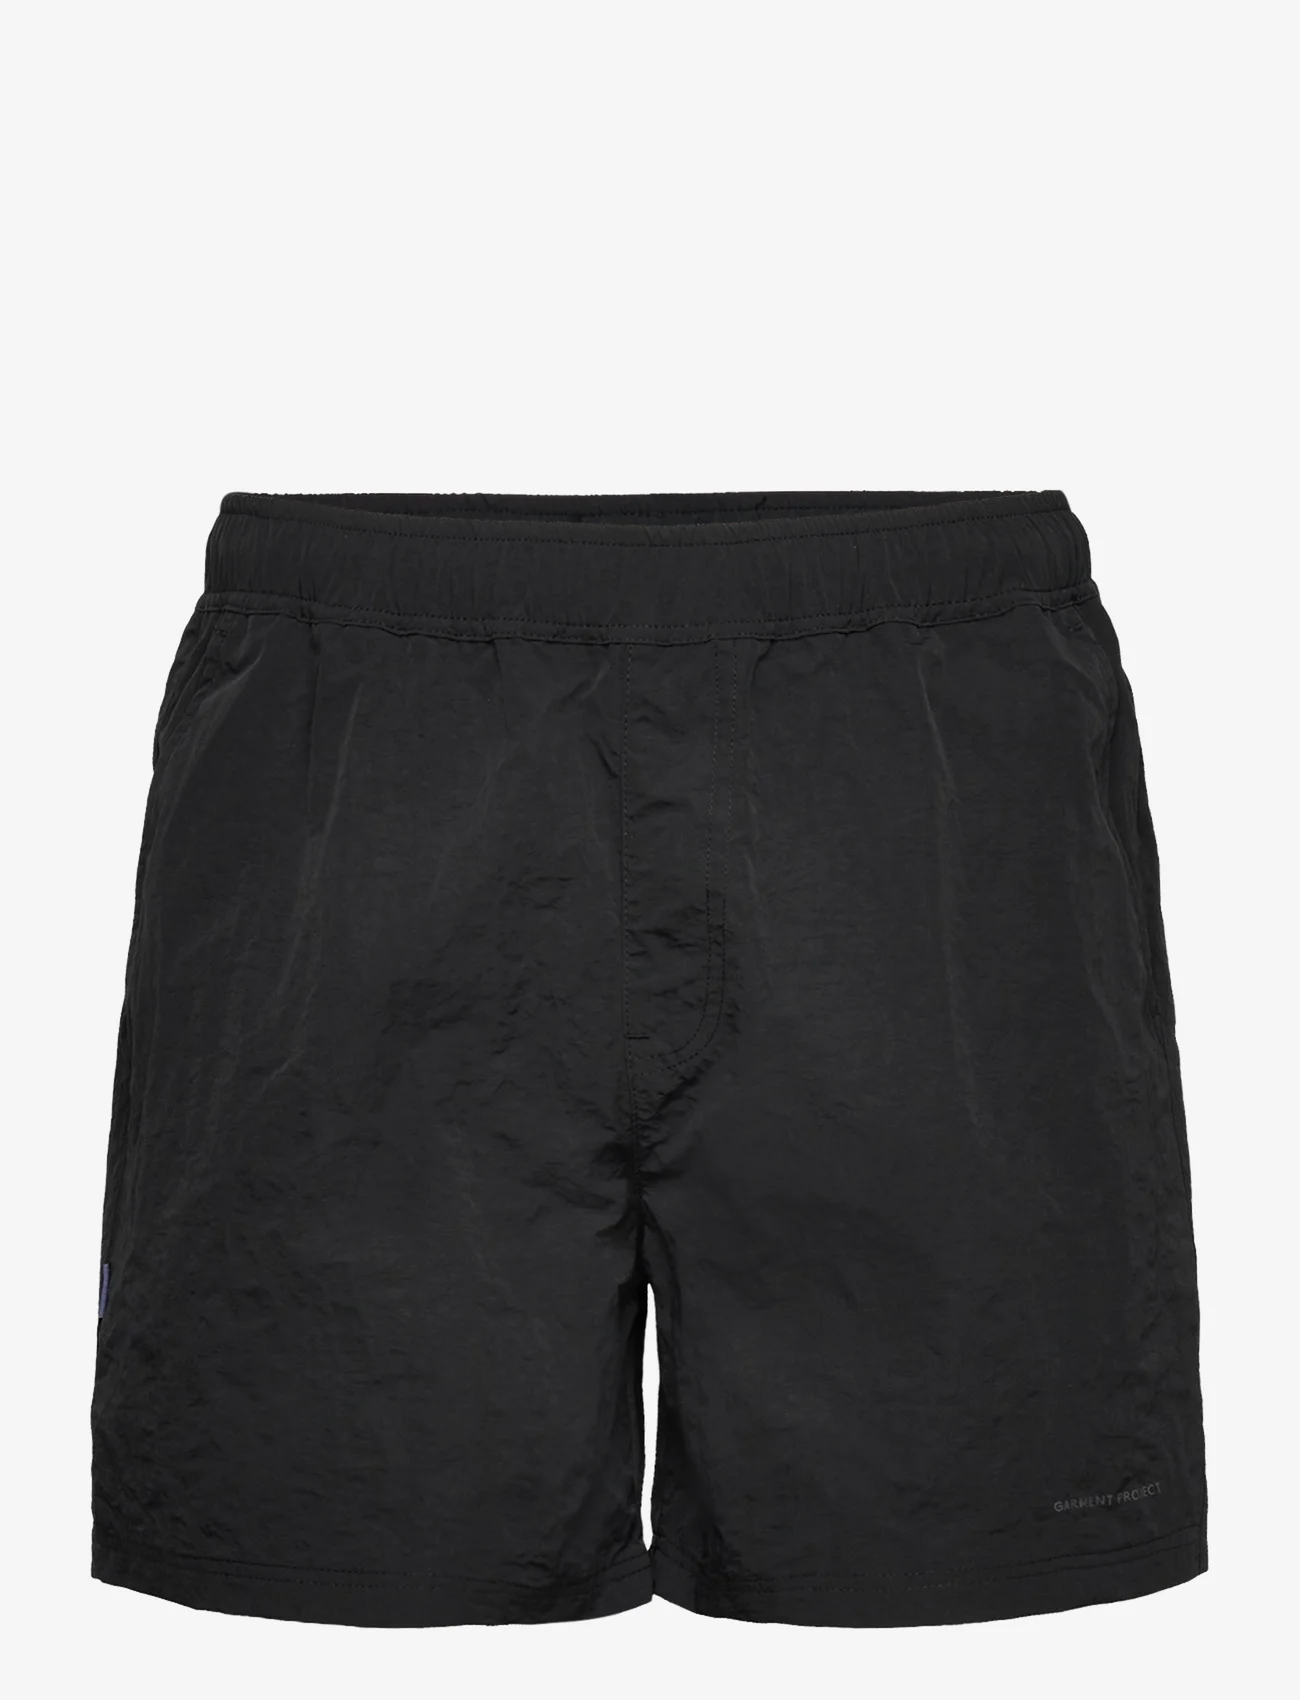 Garment Project - Tech Shorts - Black - casual shorts - black - 0